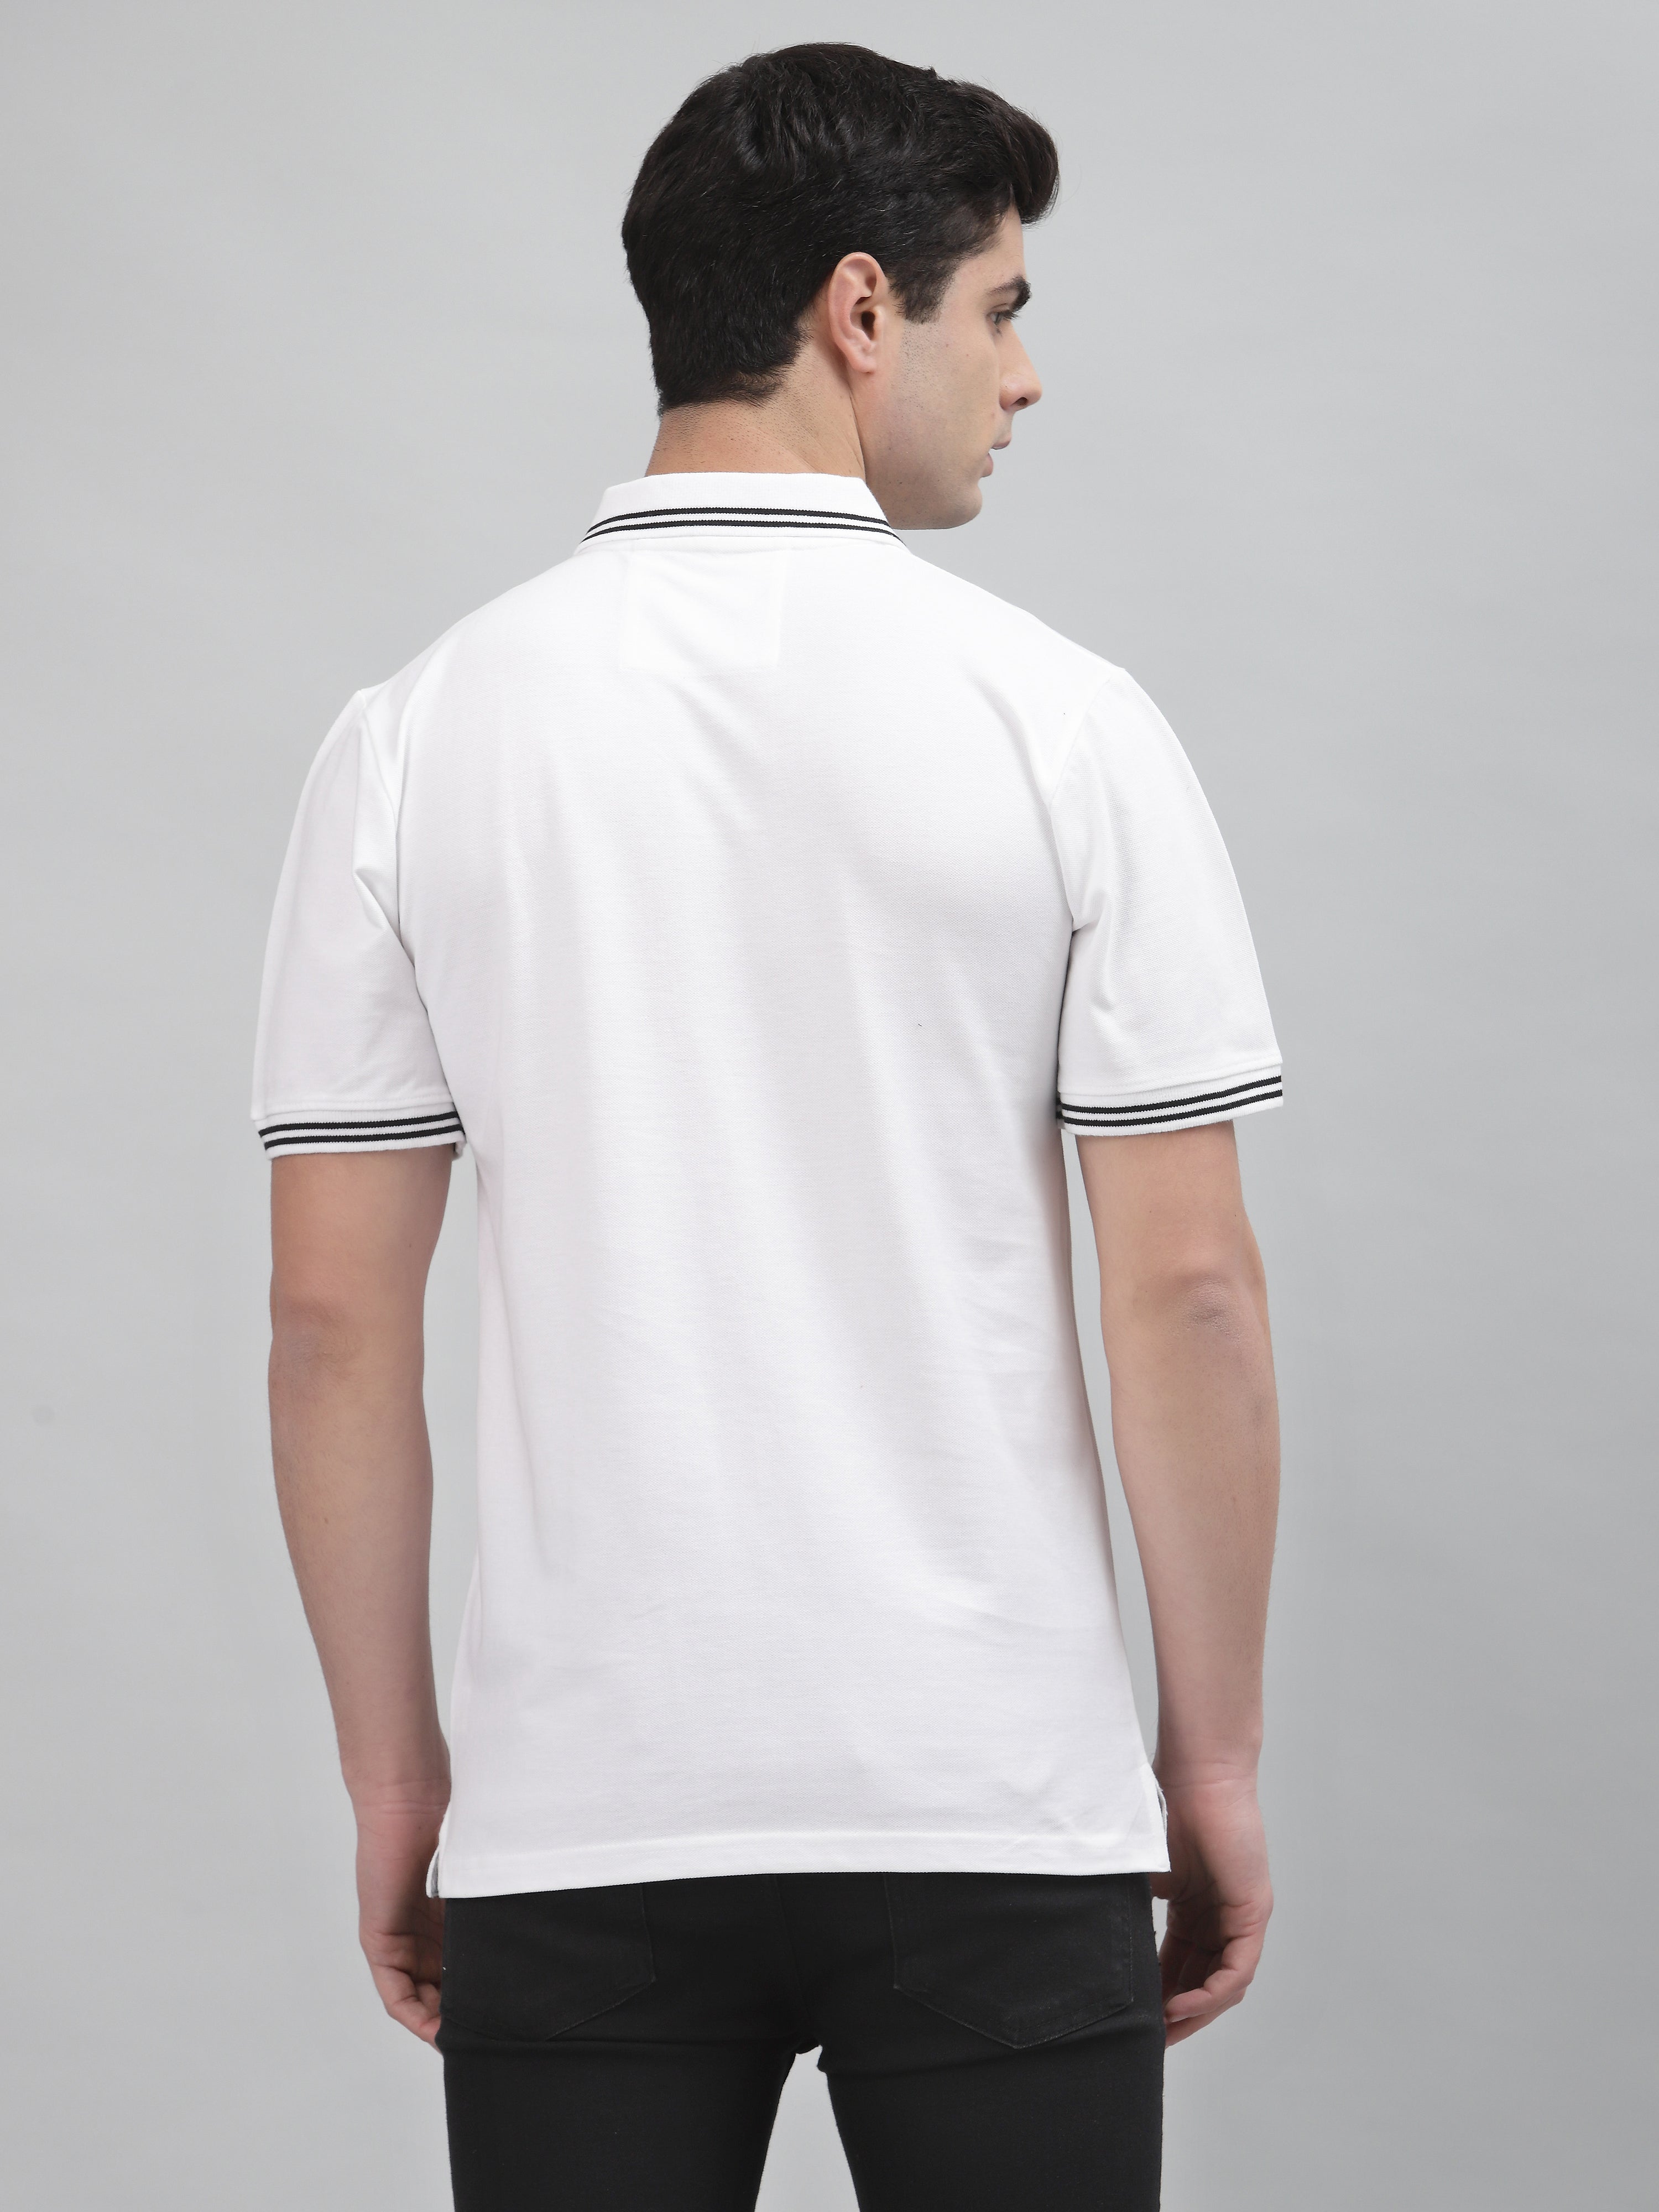 White Embroidered Pique Polo Shirt by Gavin Paris